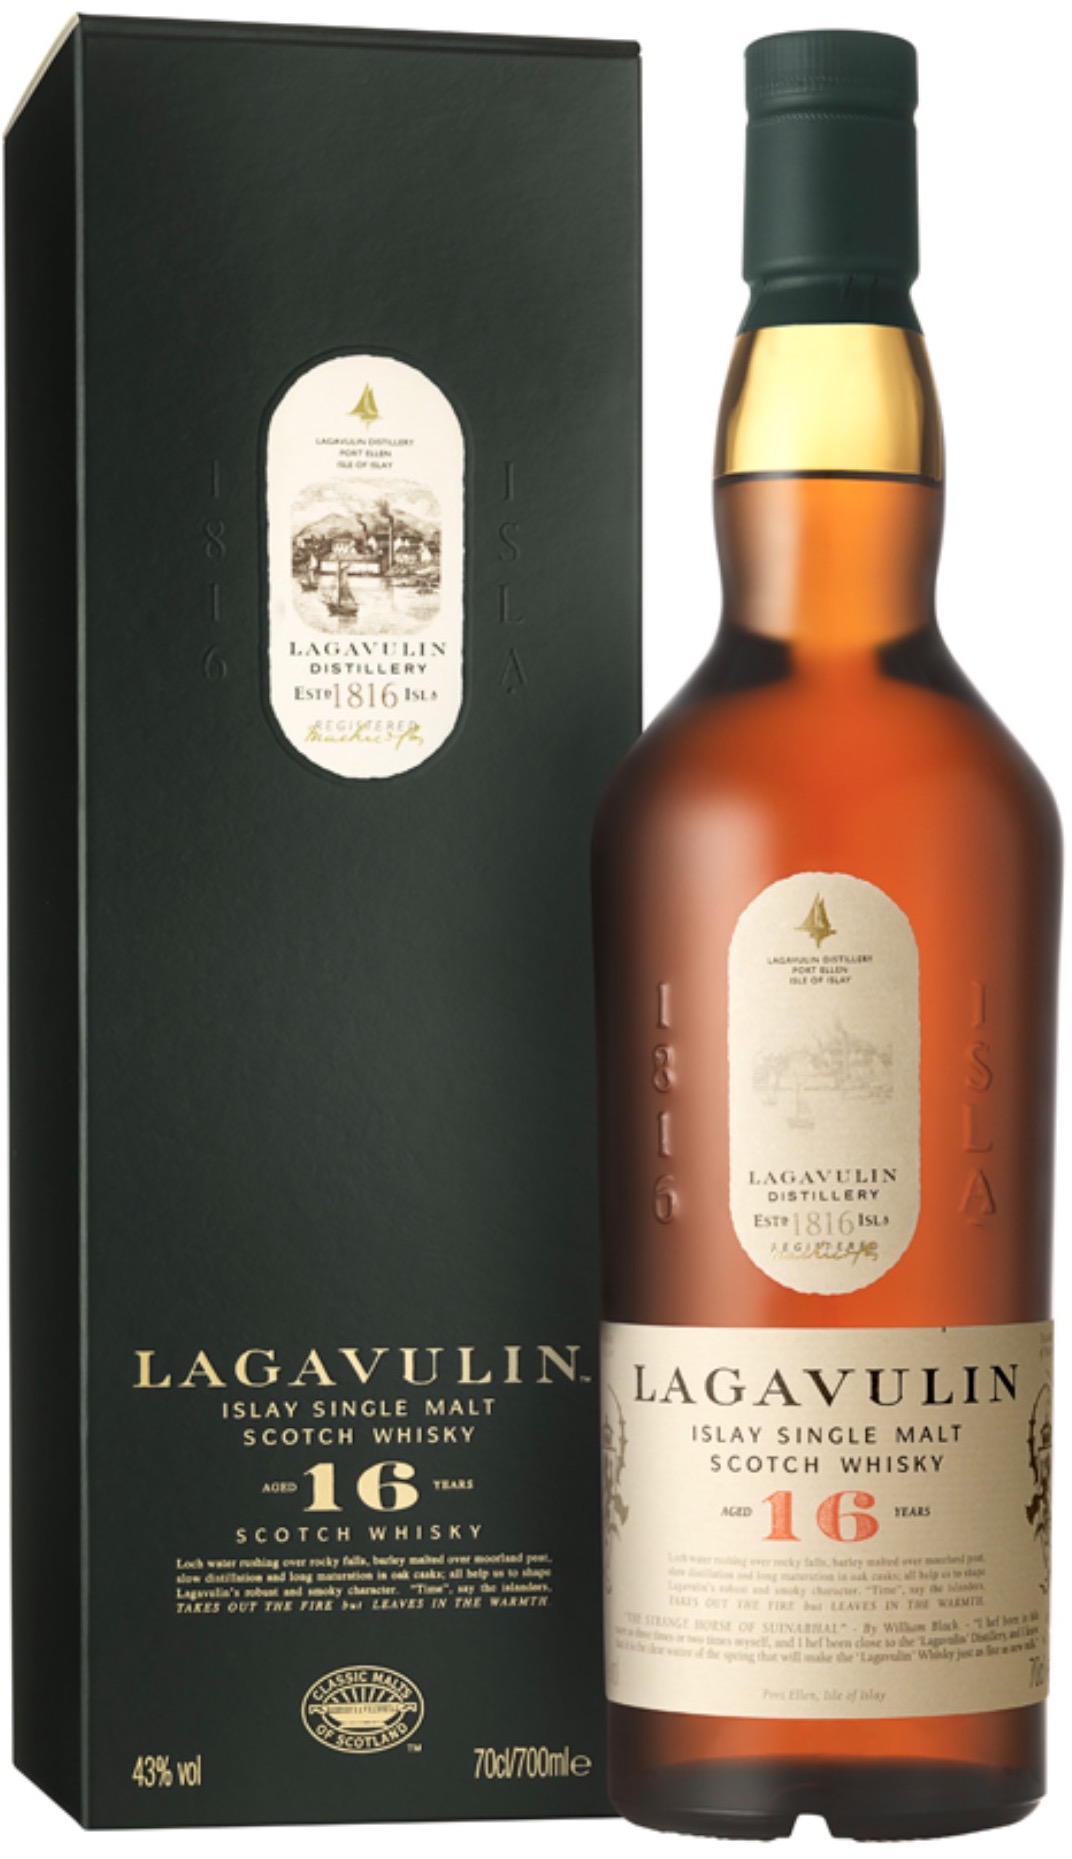 Lagavulin Islay Single Malt Scotch Whisky 16 Years Old 43% GP 0,7L